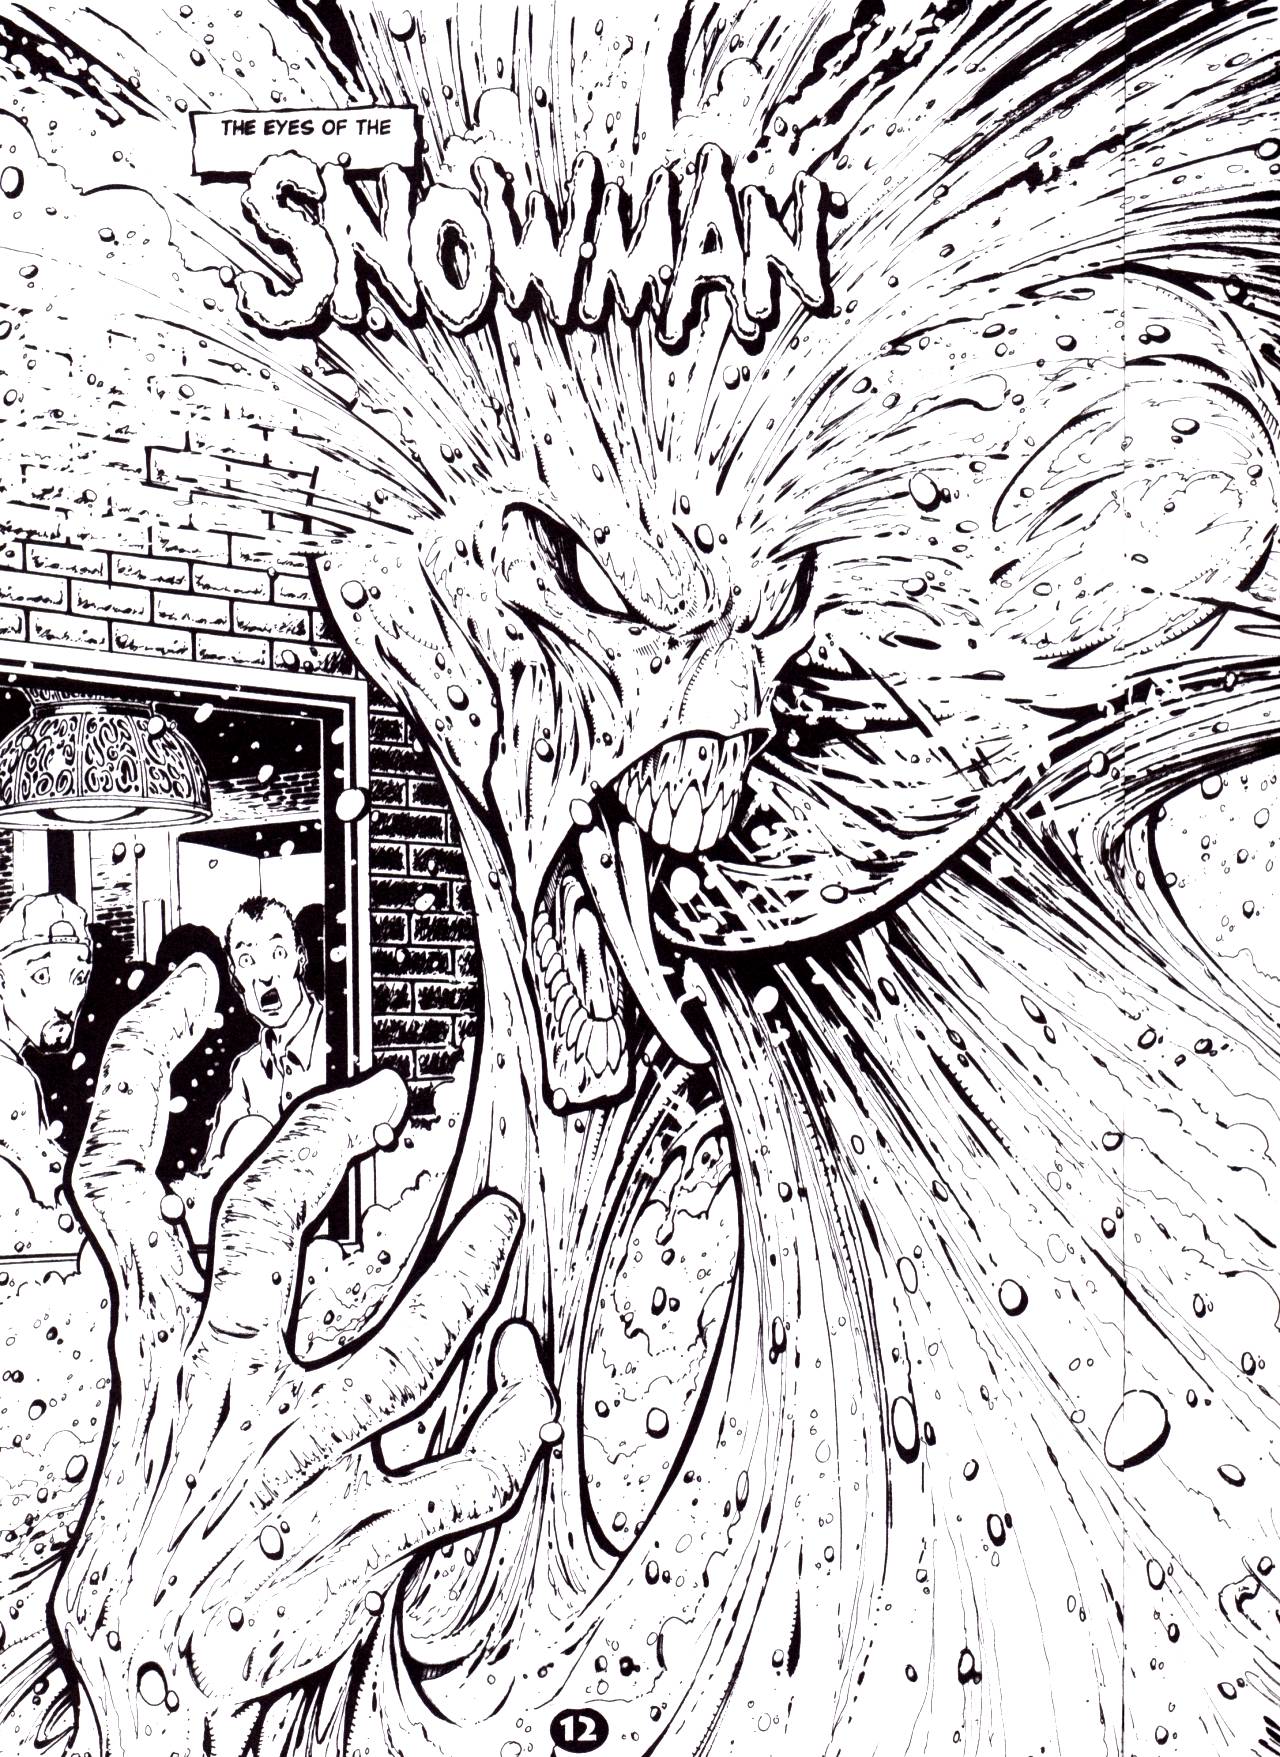 Read online Snowman comic -  Issue #1 - 15